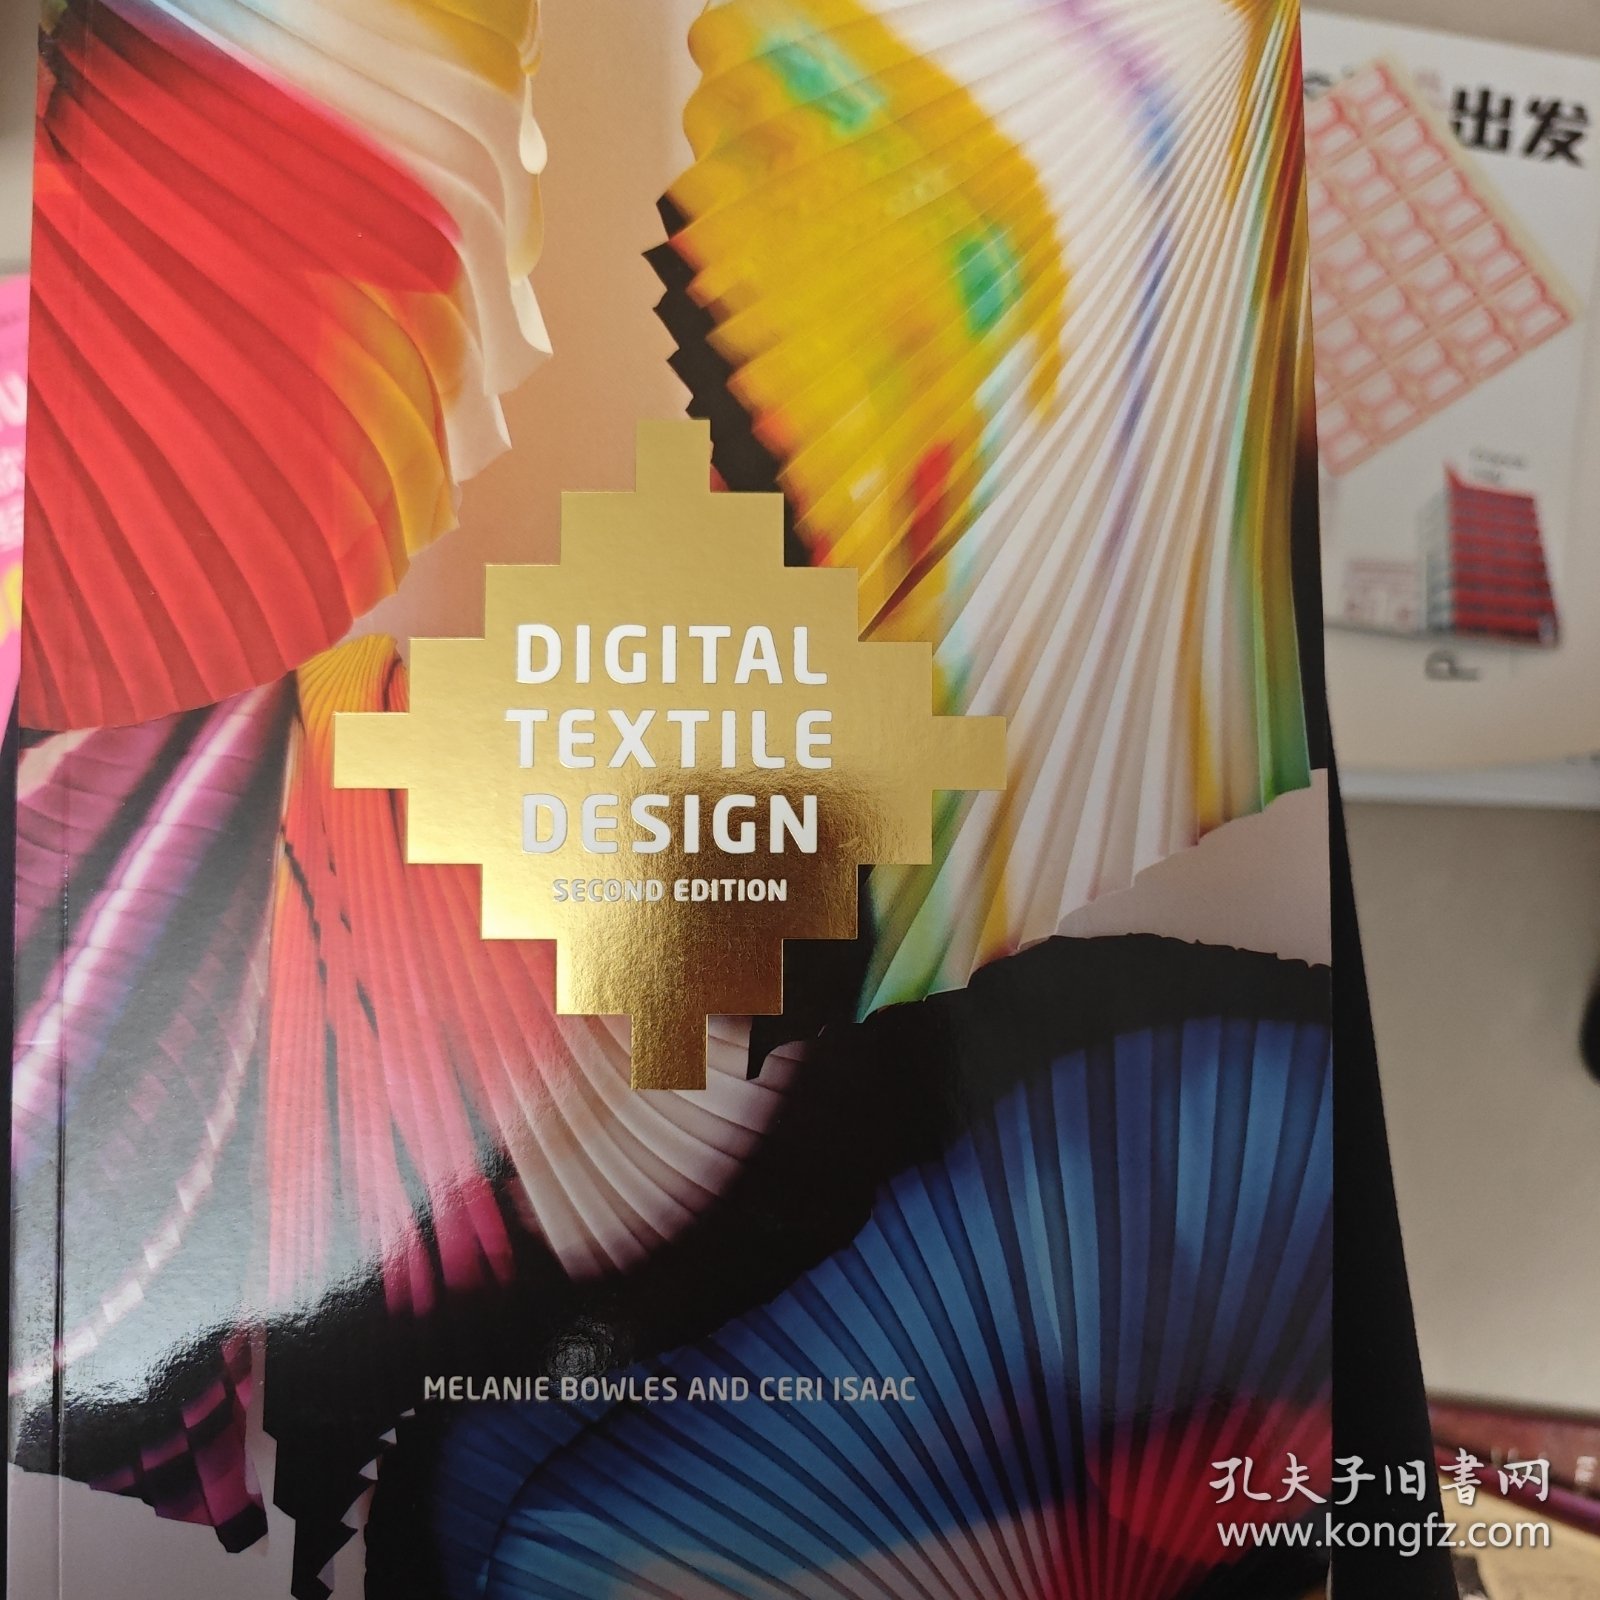 Digital Textile Design, 2nd edition 数字化纺织设计